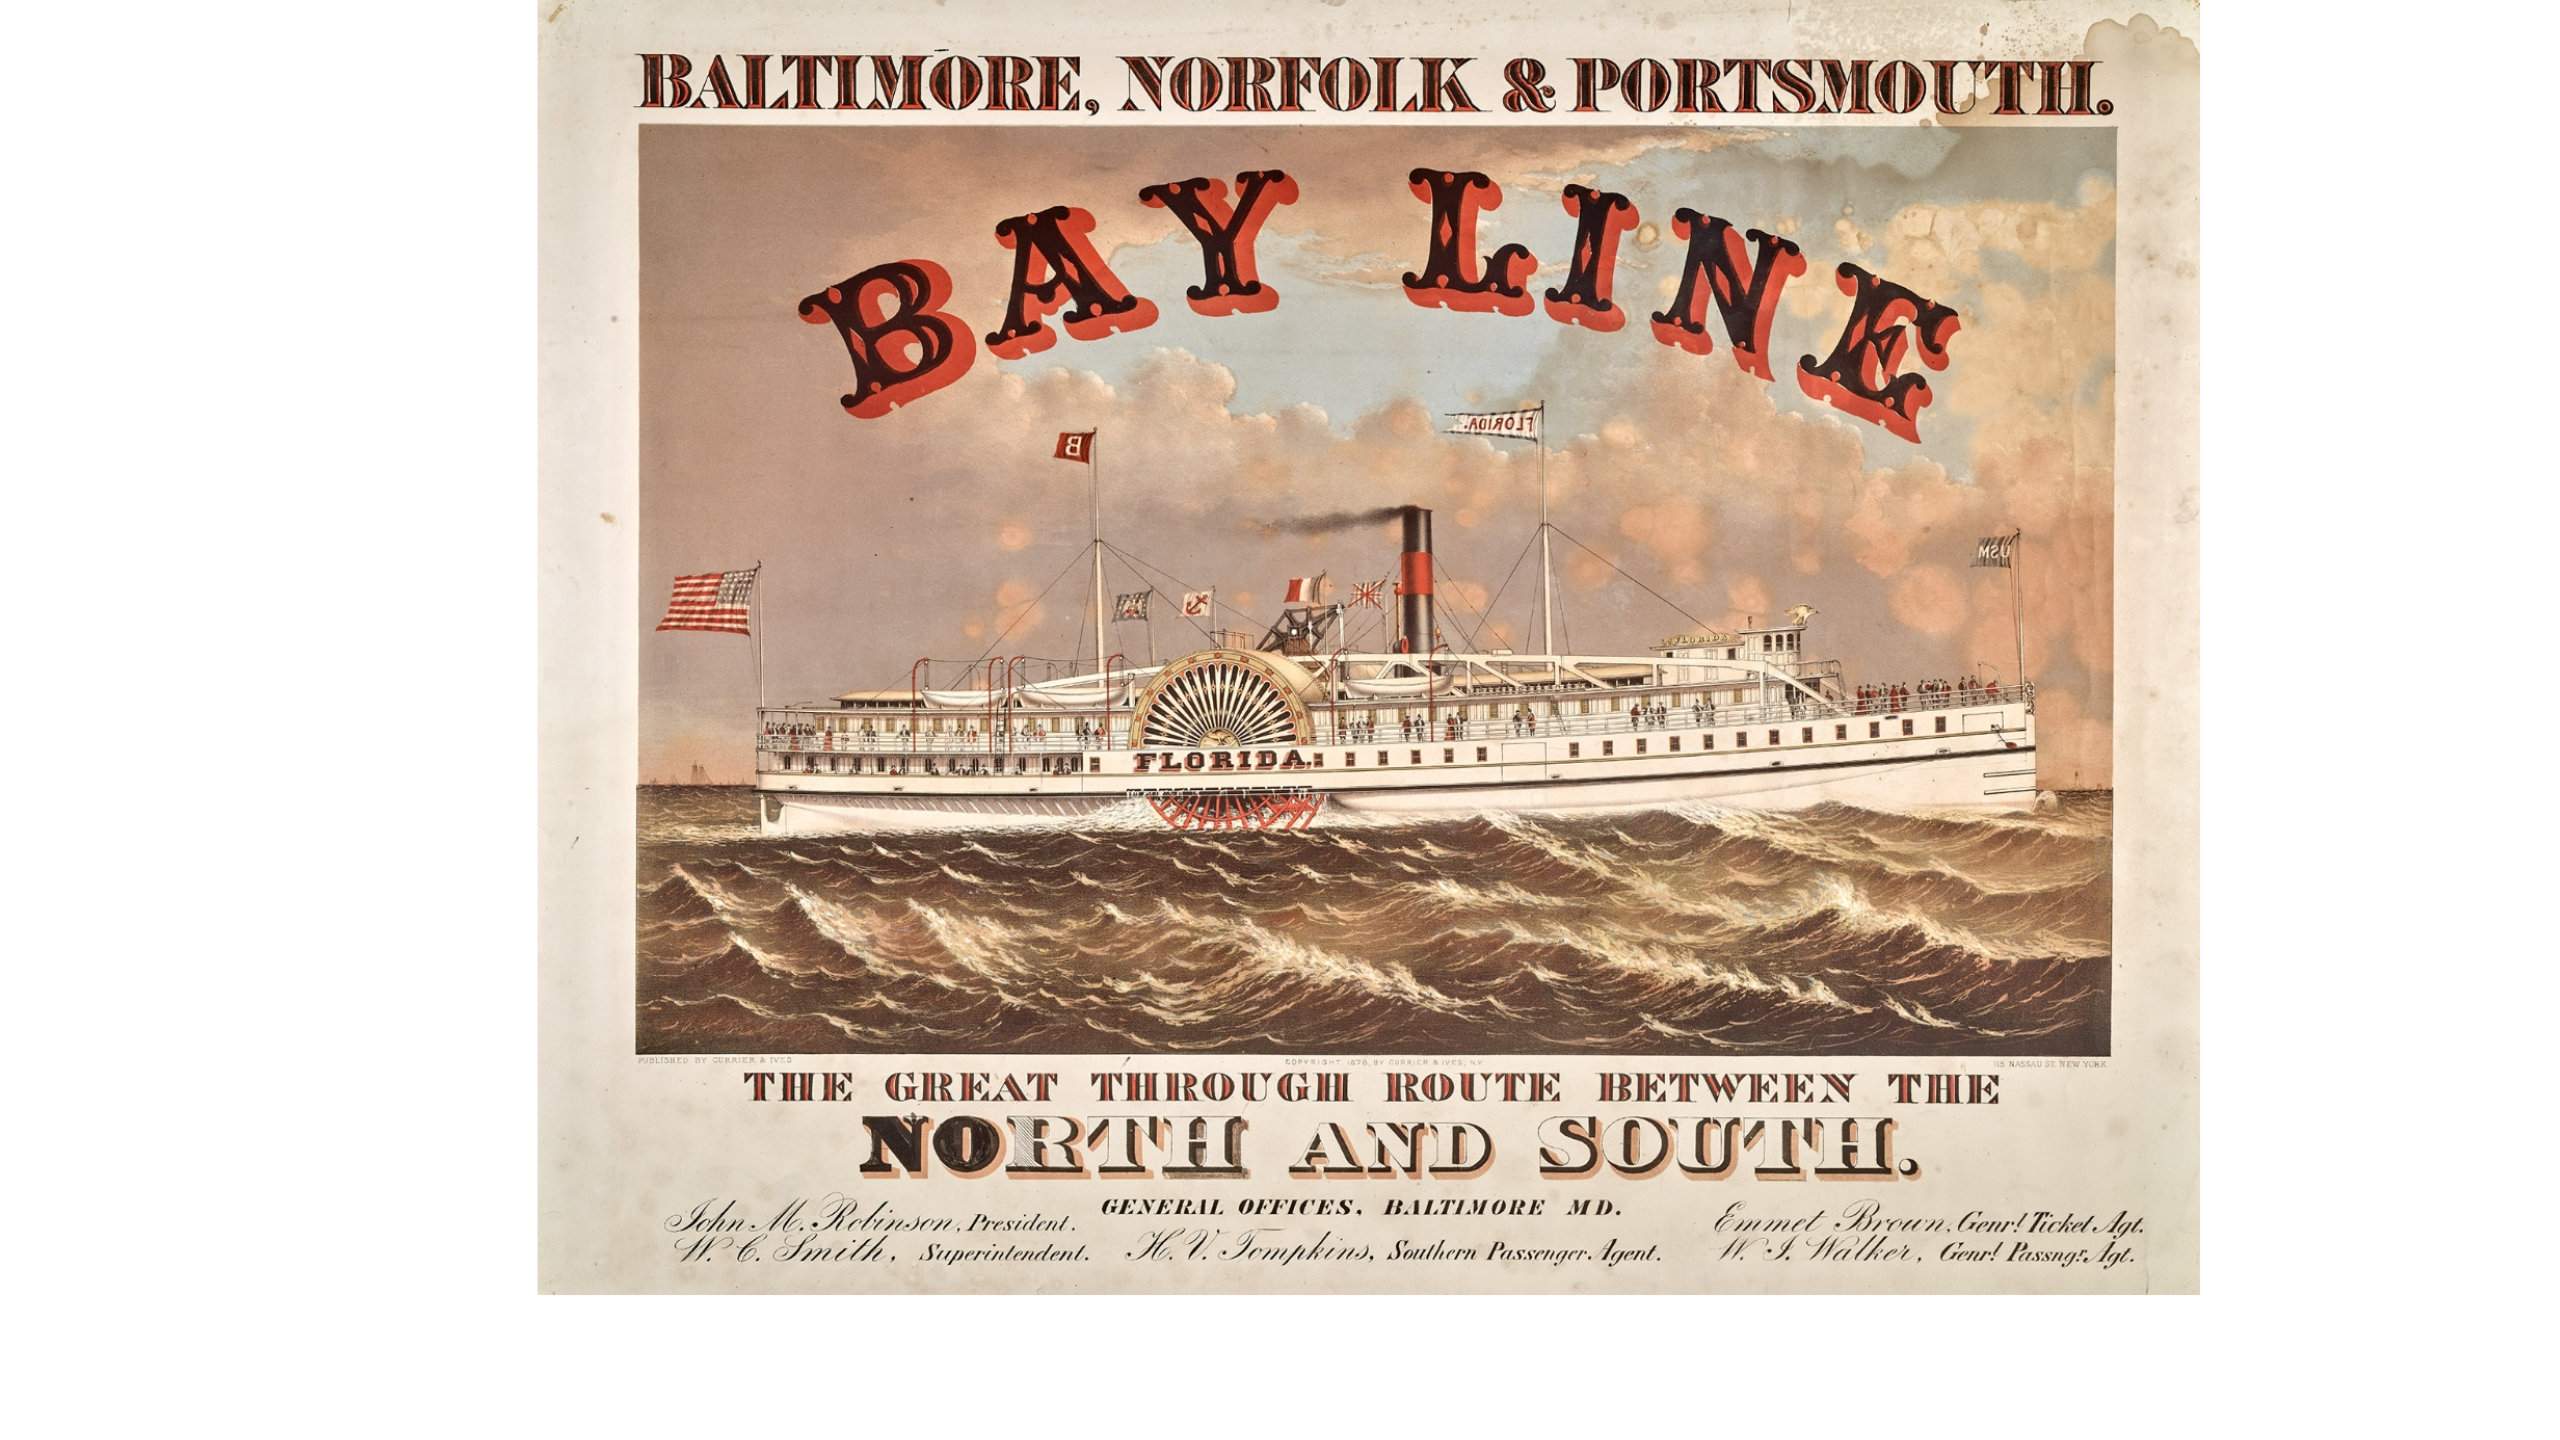 Lithograph print circa 1877 featuring the Bay Line steamship